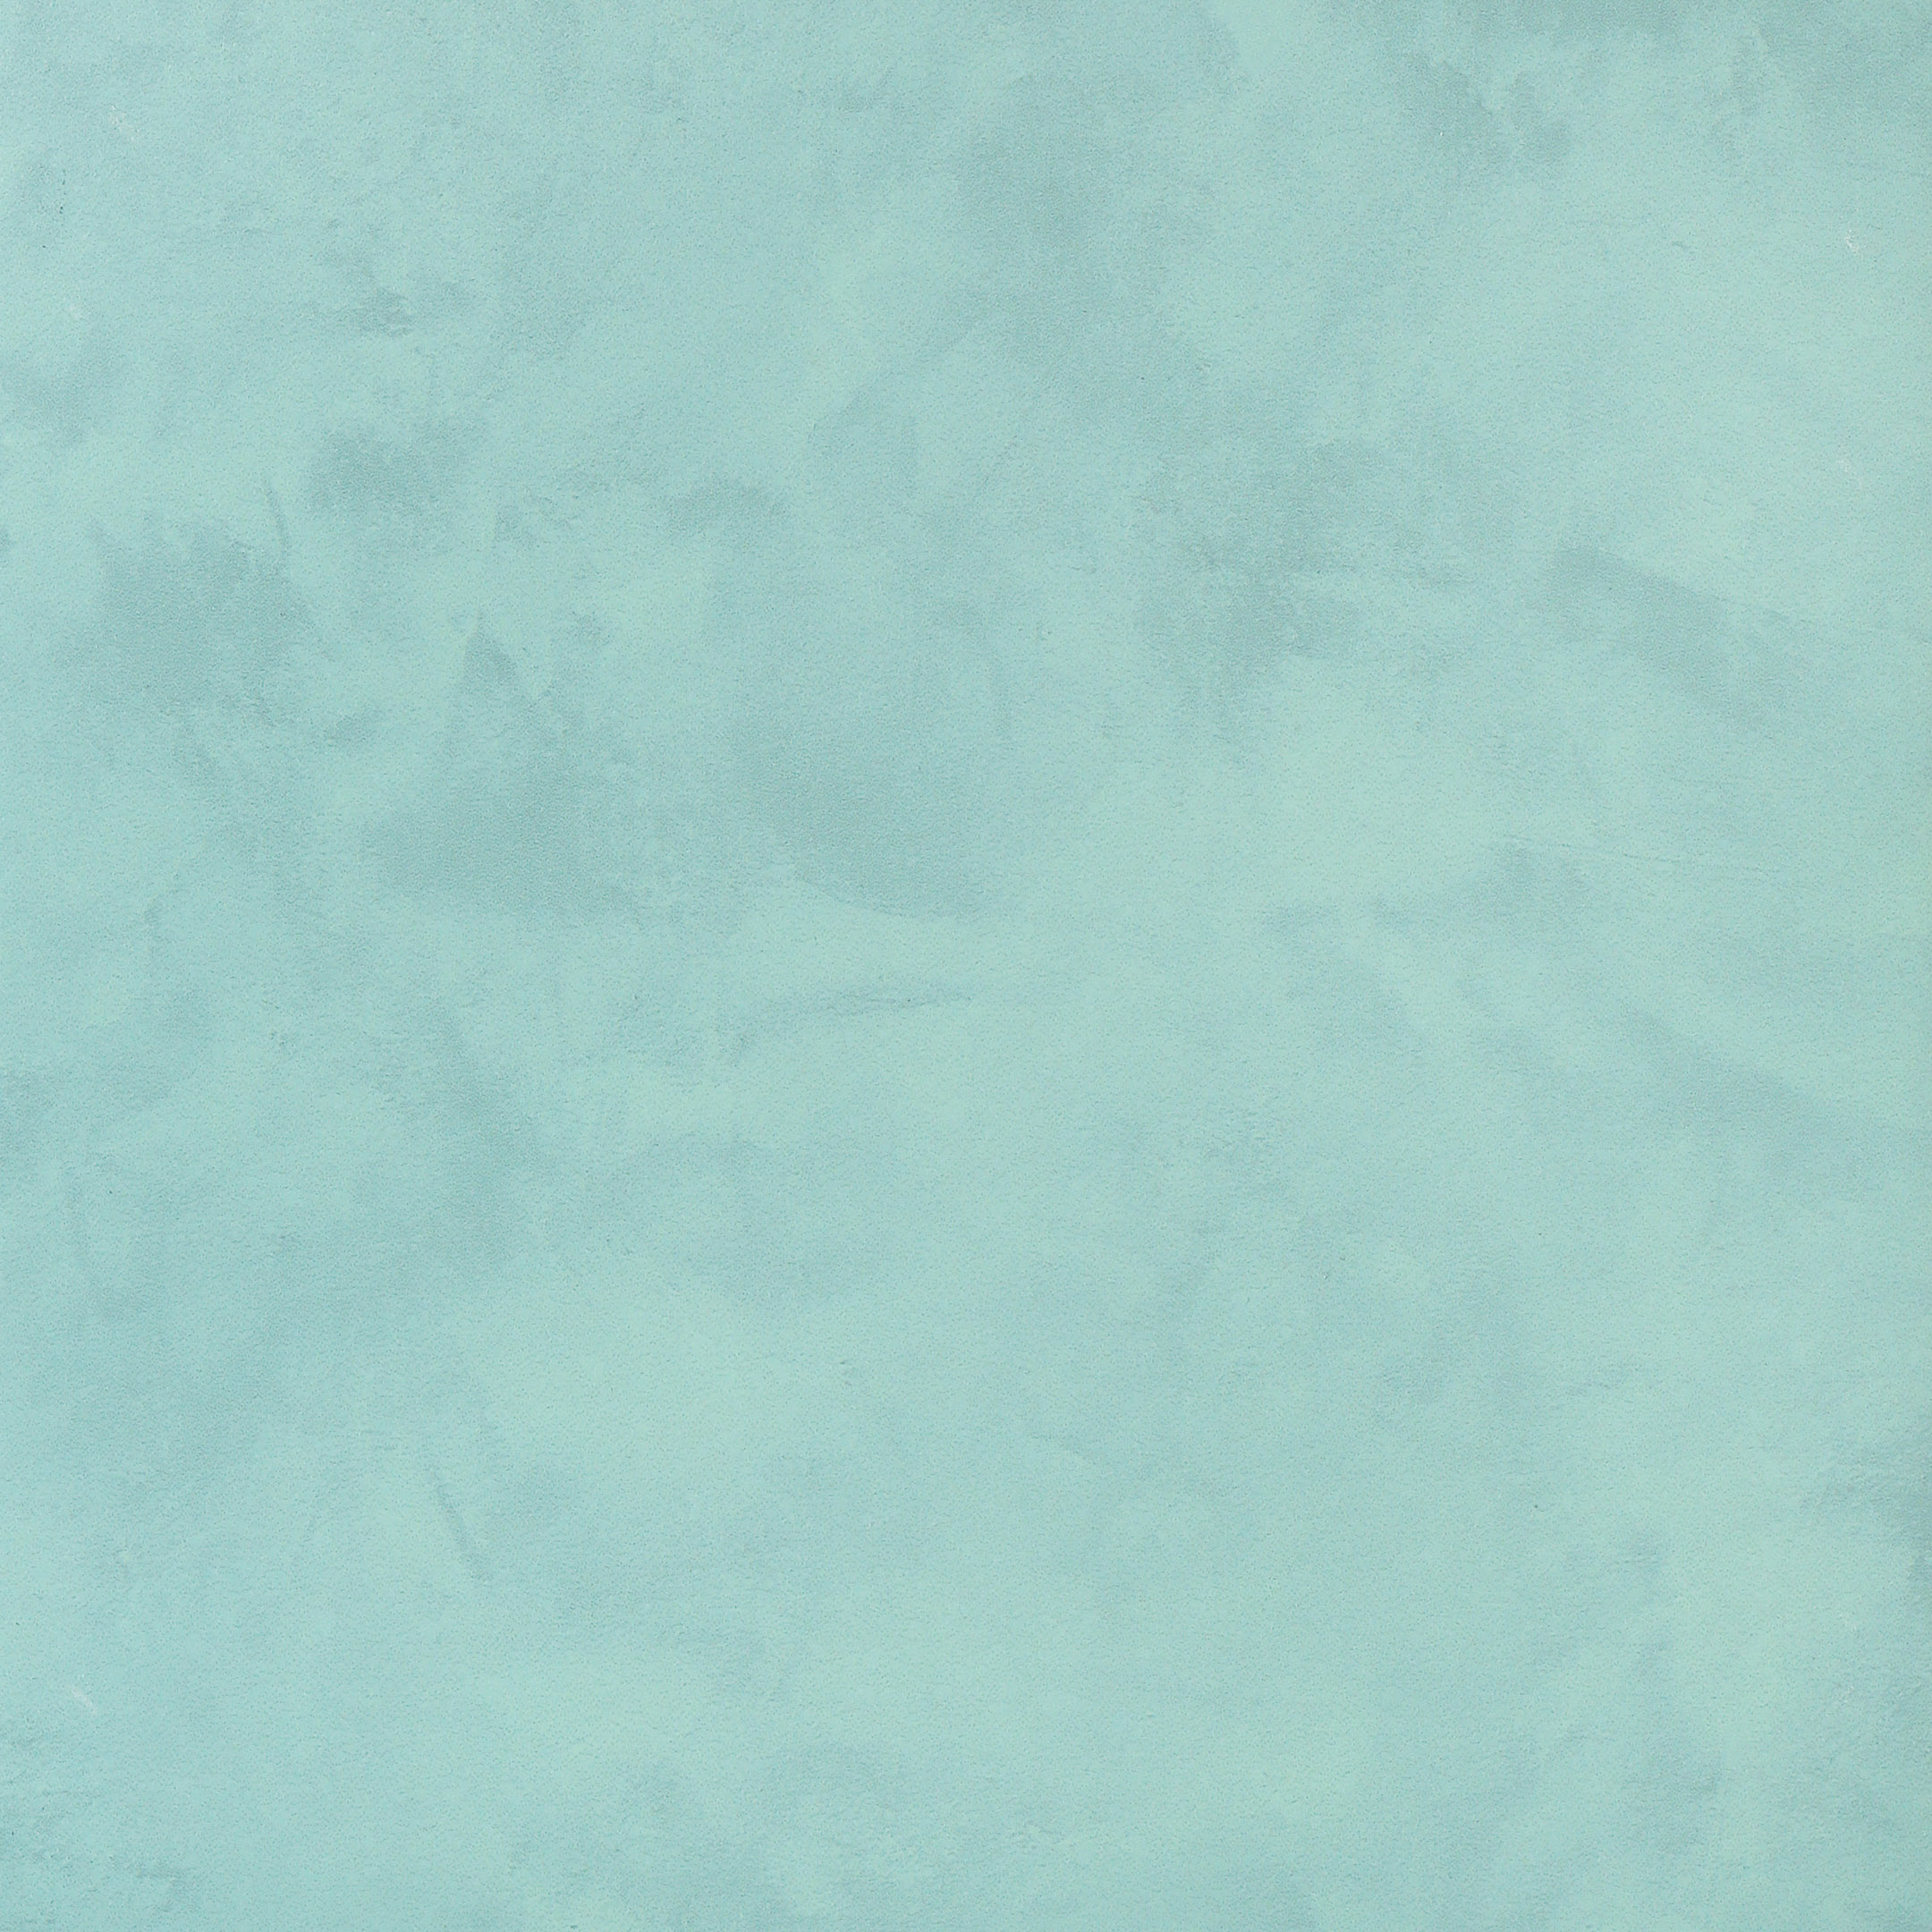 фото Керамогранит kerama marazzi фоскари голубой 300x300x8 мм (16 шт.=1,44 кв. м.)